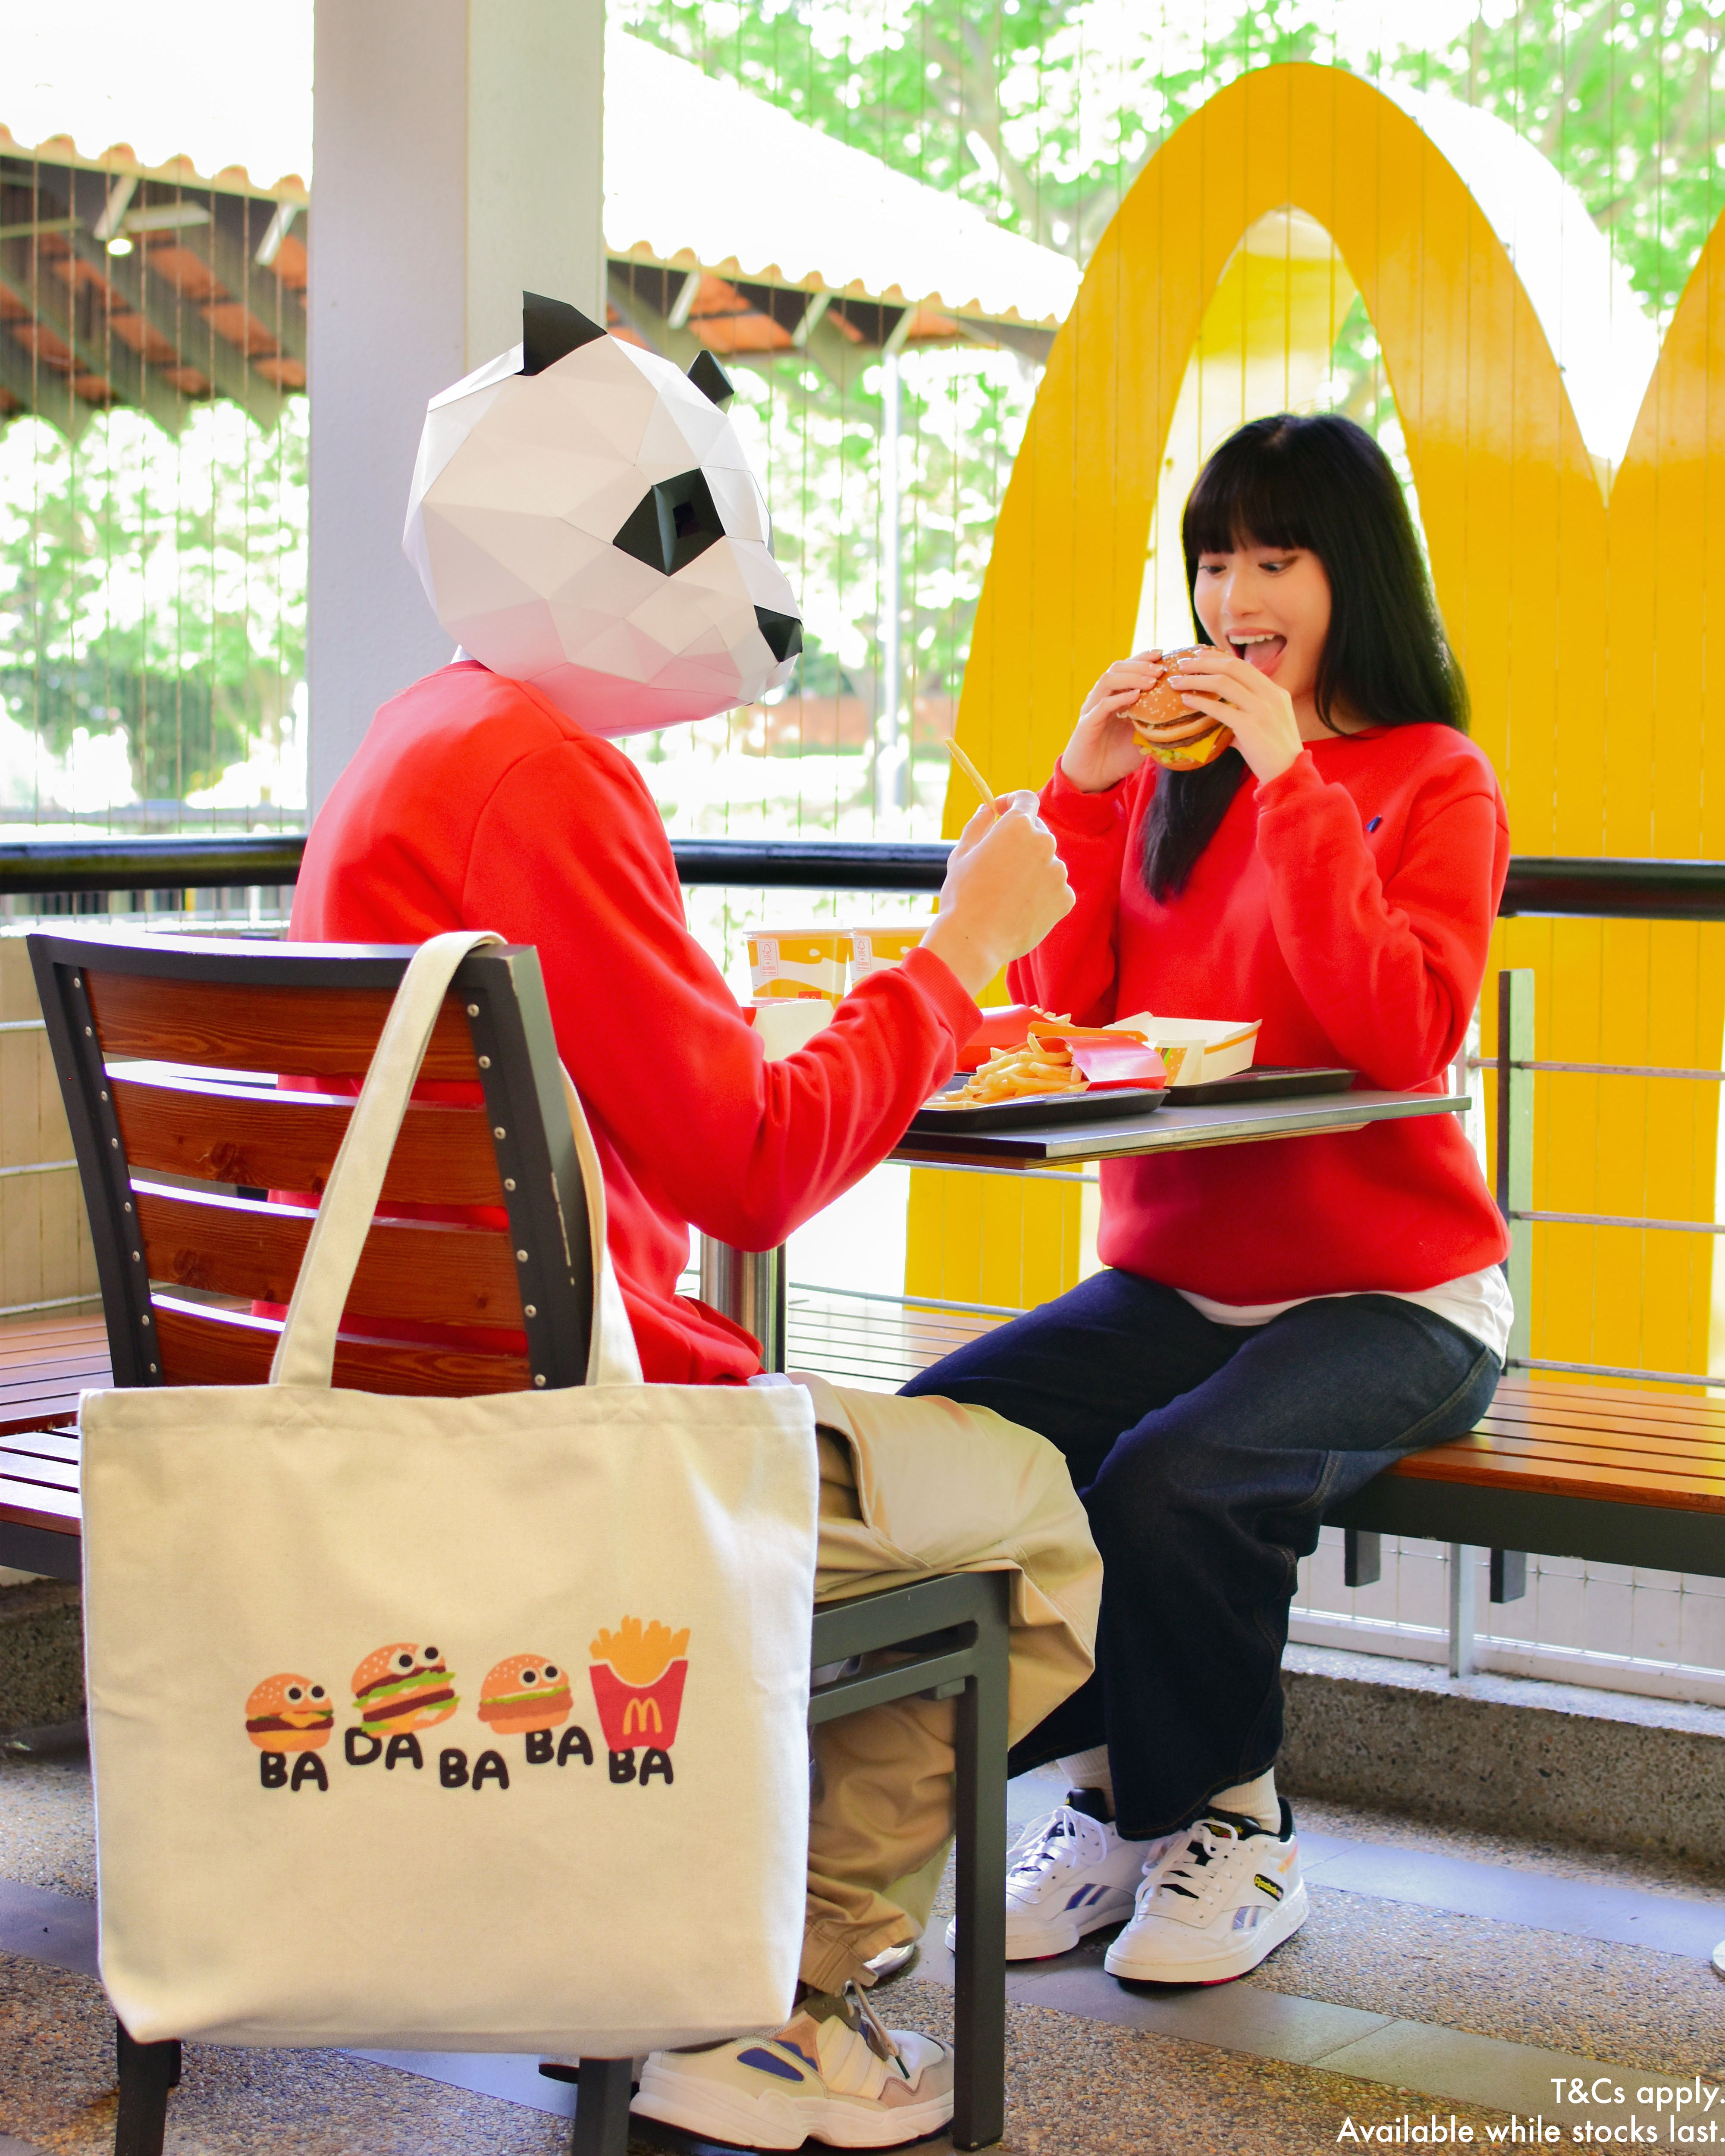 [MyM Member Exclusive] McDonald's x Sidersonline Ba Da Ba-g [Not For Sale]